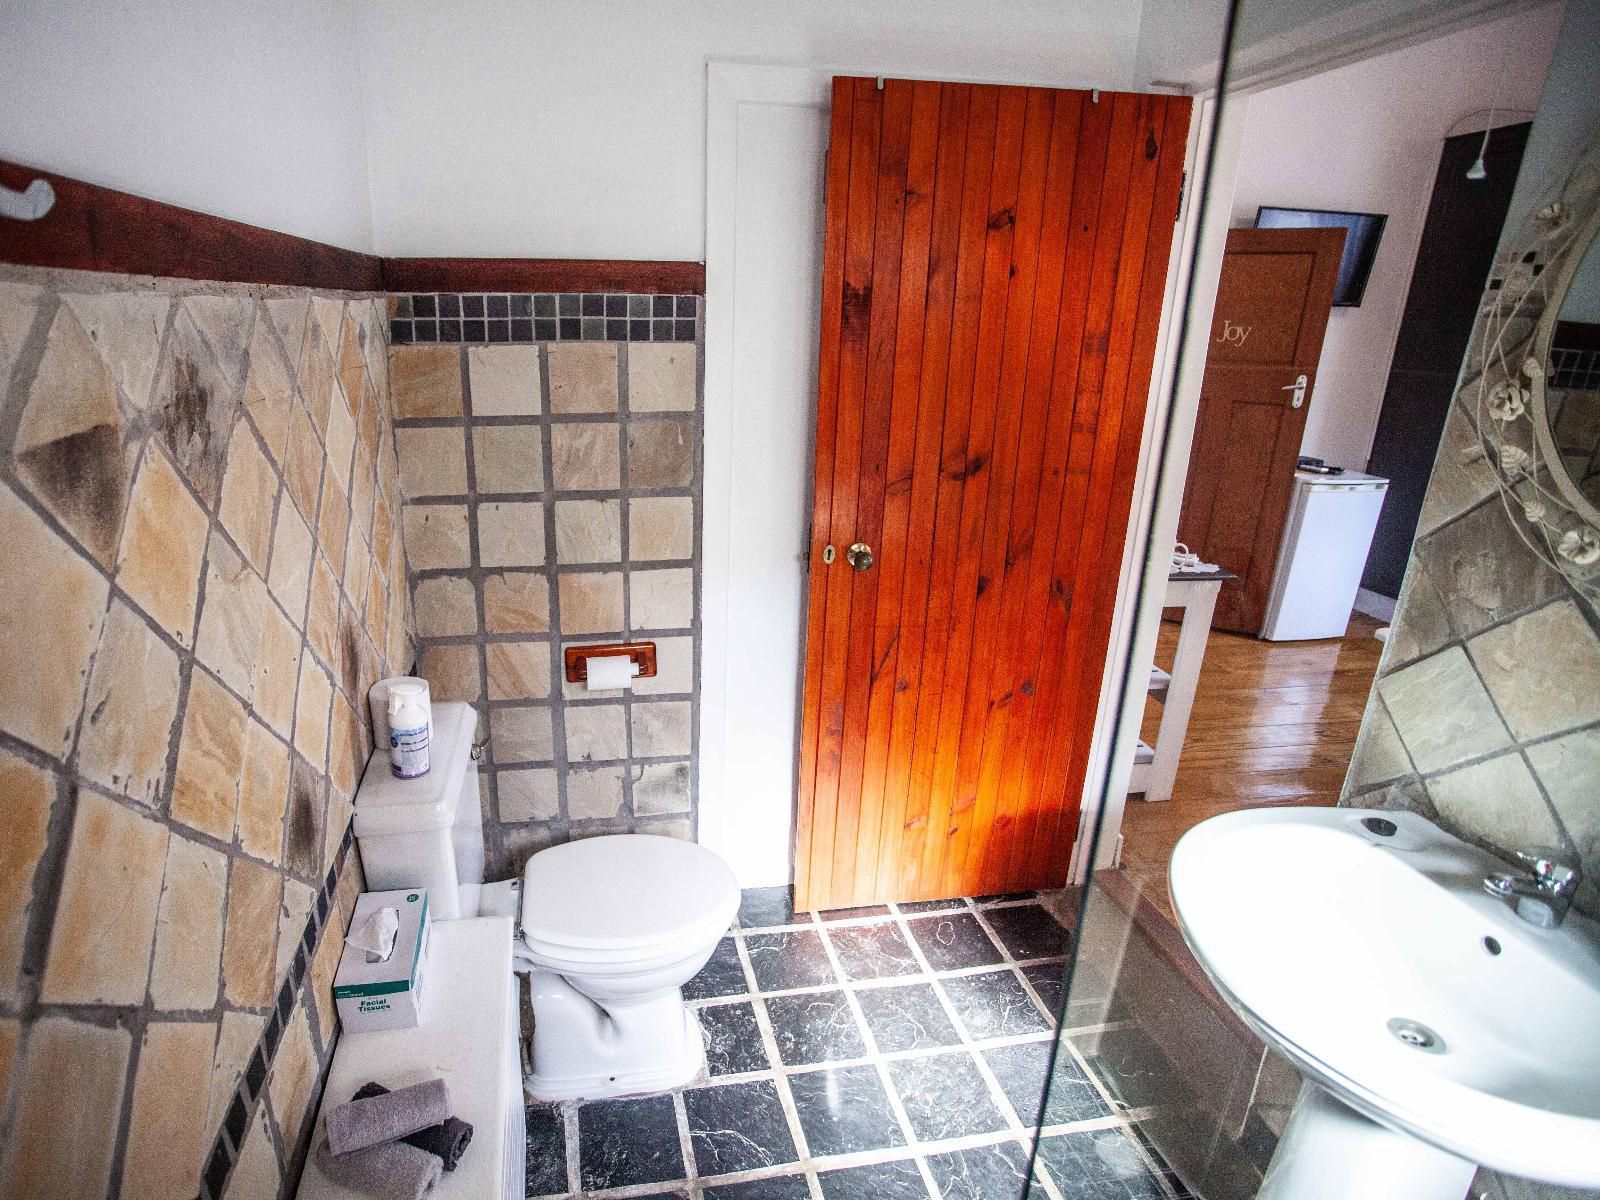 Flametree Guesthouse Swellendam Western Cape South Africa Door, Architecture, Bathroom